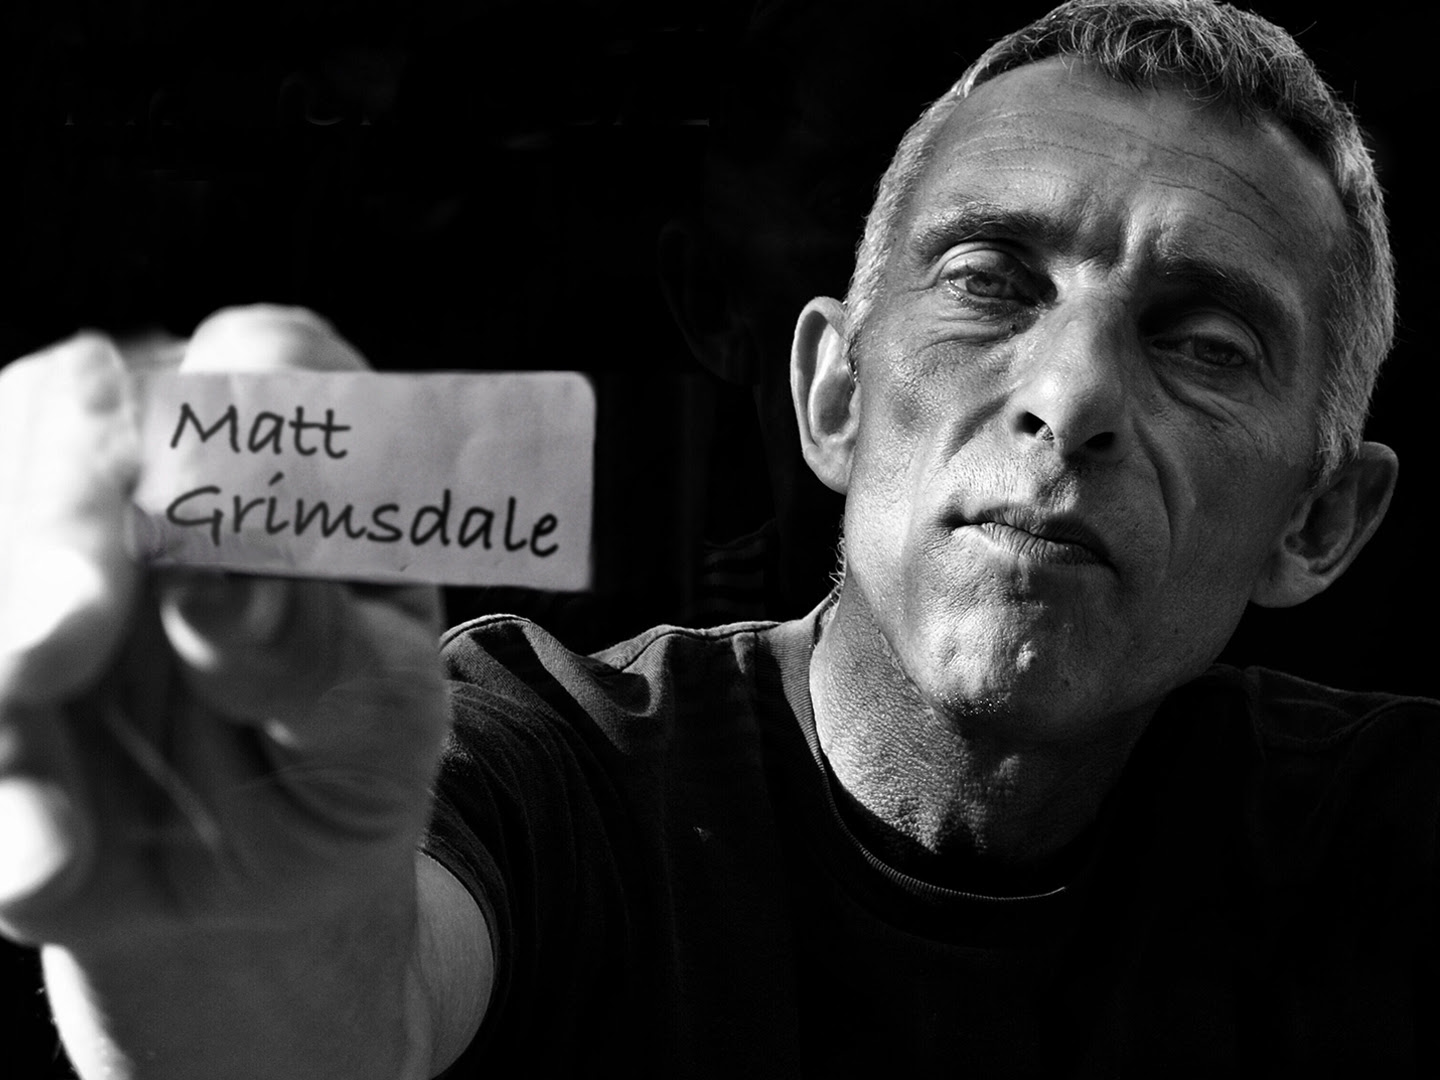  Matt Grimsdale estrena vídeoclip